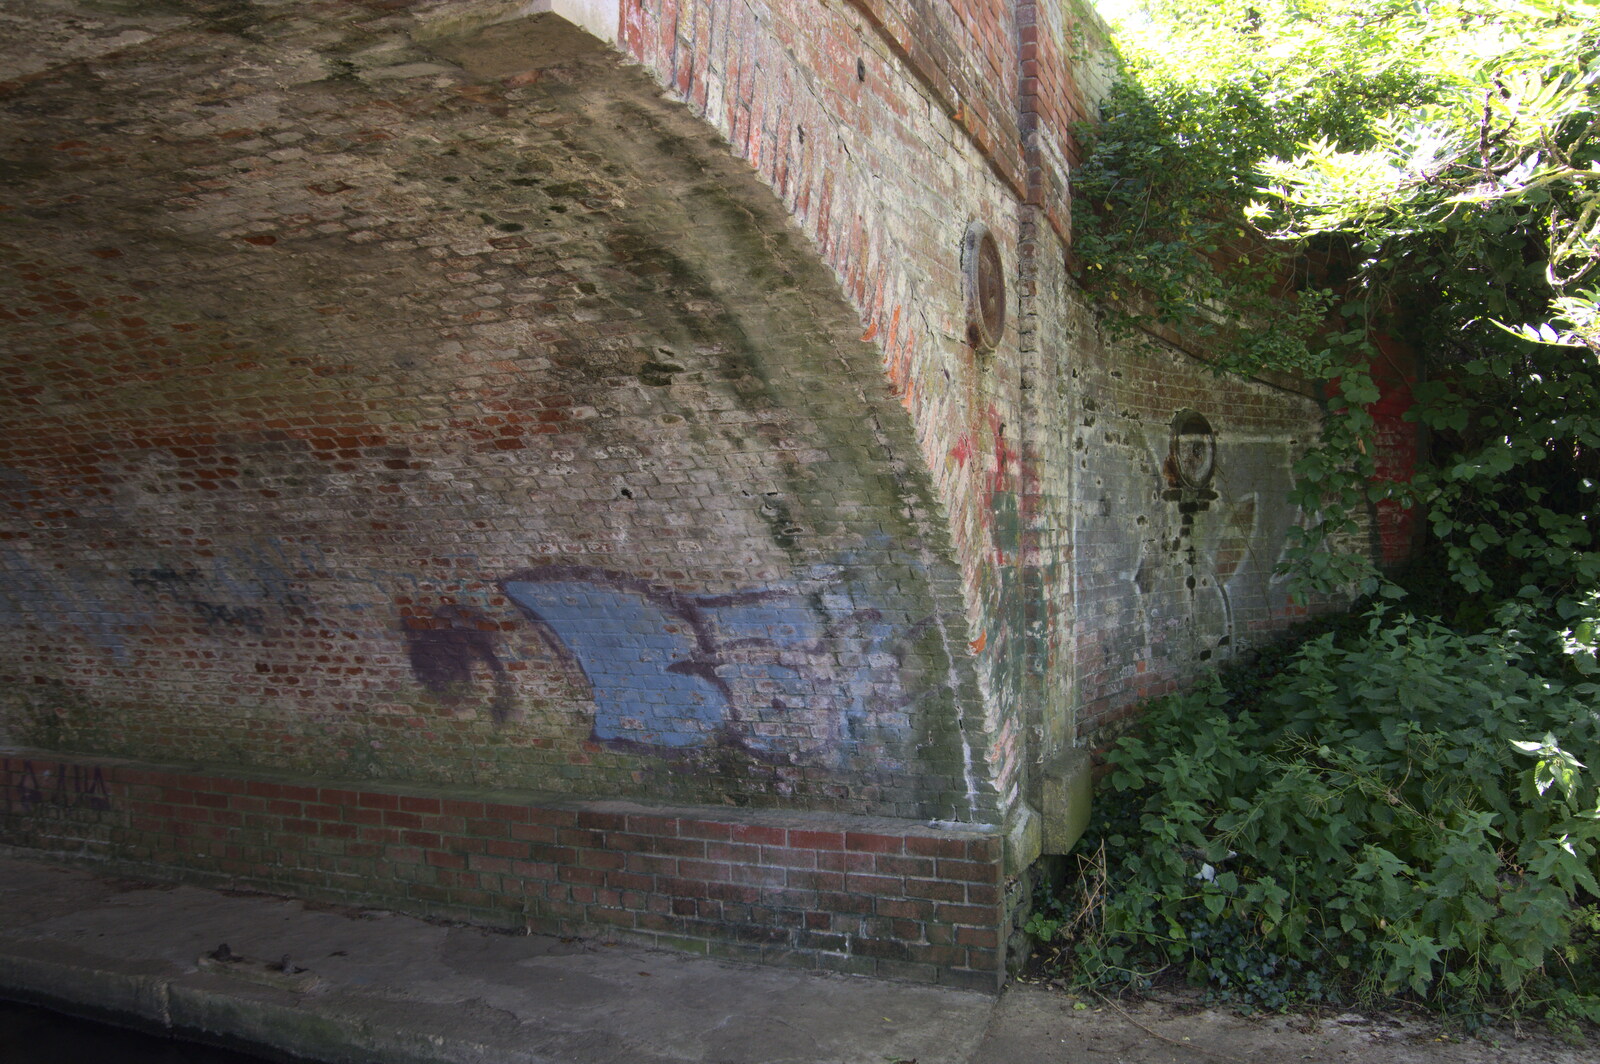 More under-the-bridge graffiti from A Walk Around Abbey Bridges, Eye, Suffolk - 5th July 2020